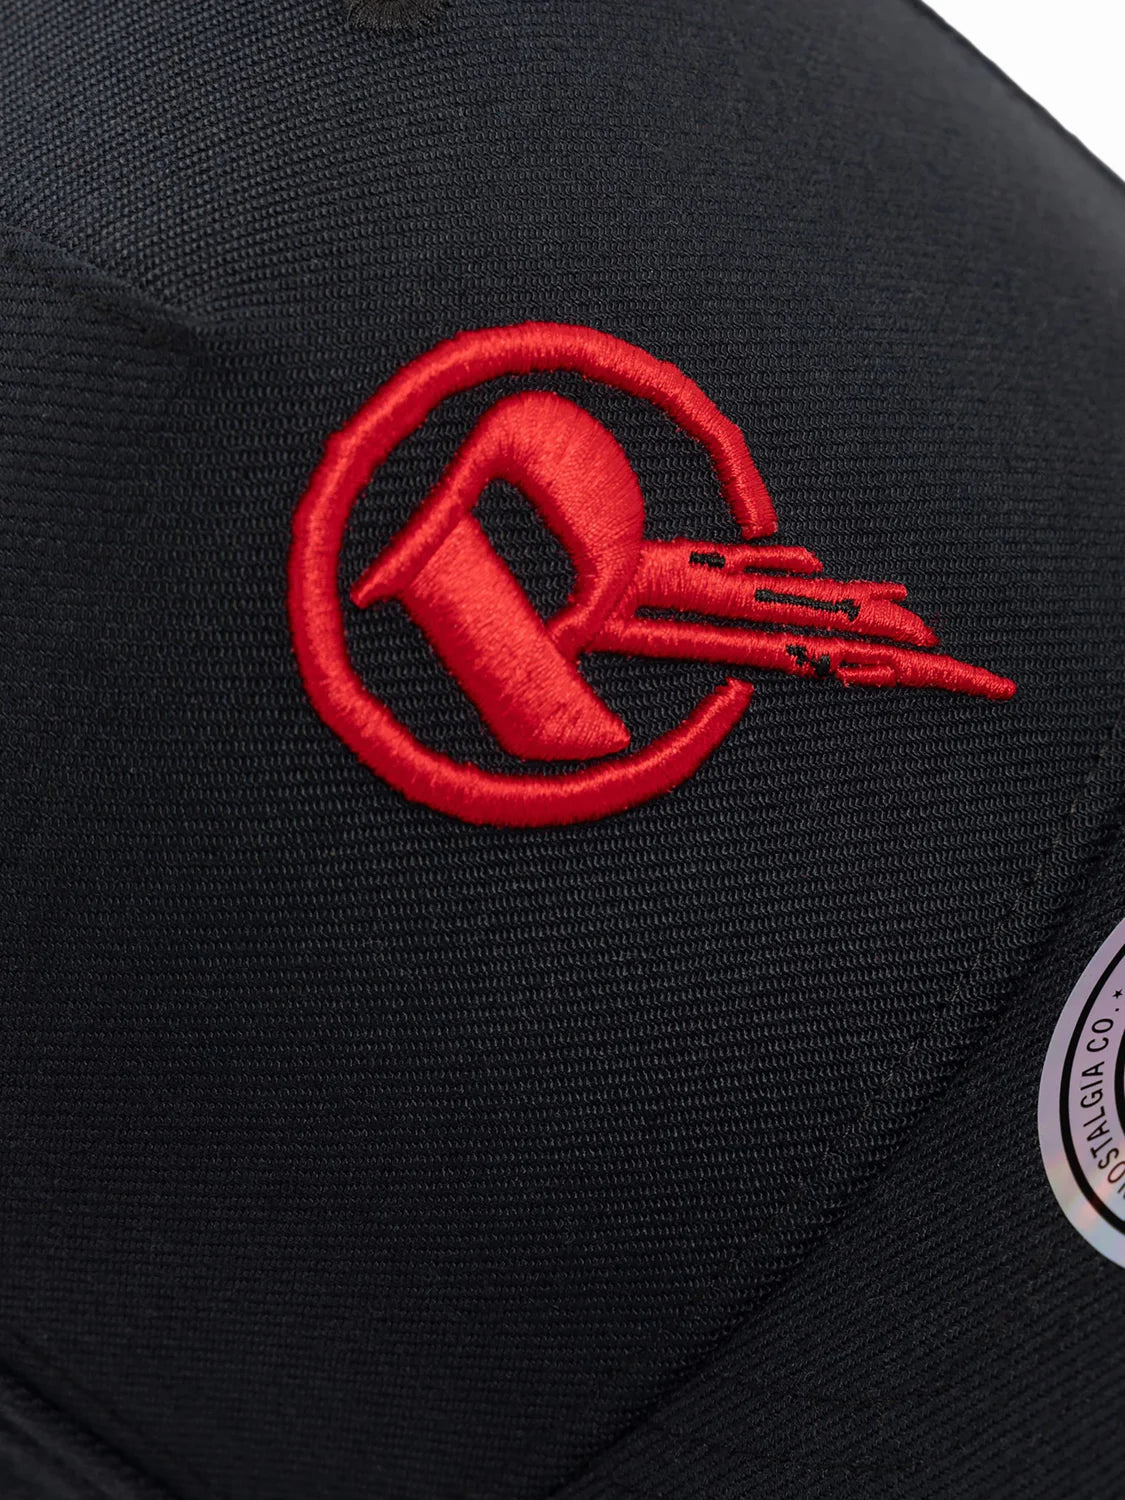 Melbourne Renegades Hat - BBL Black Team Logo Classic Redline Snapback Cap - Mitchell & Ness